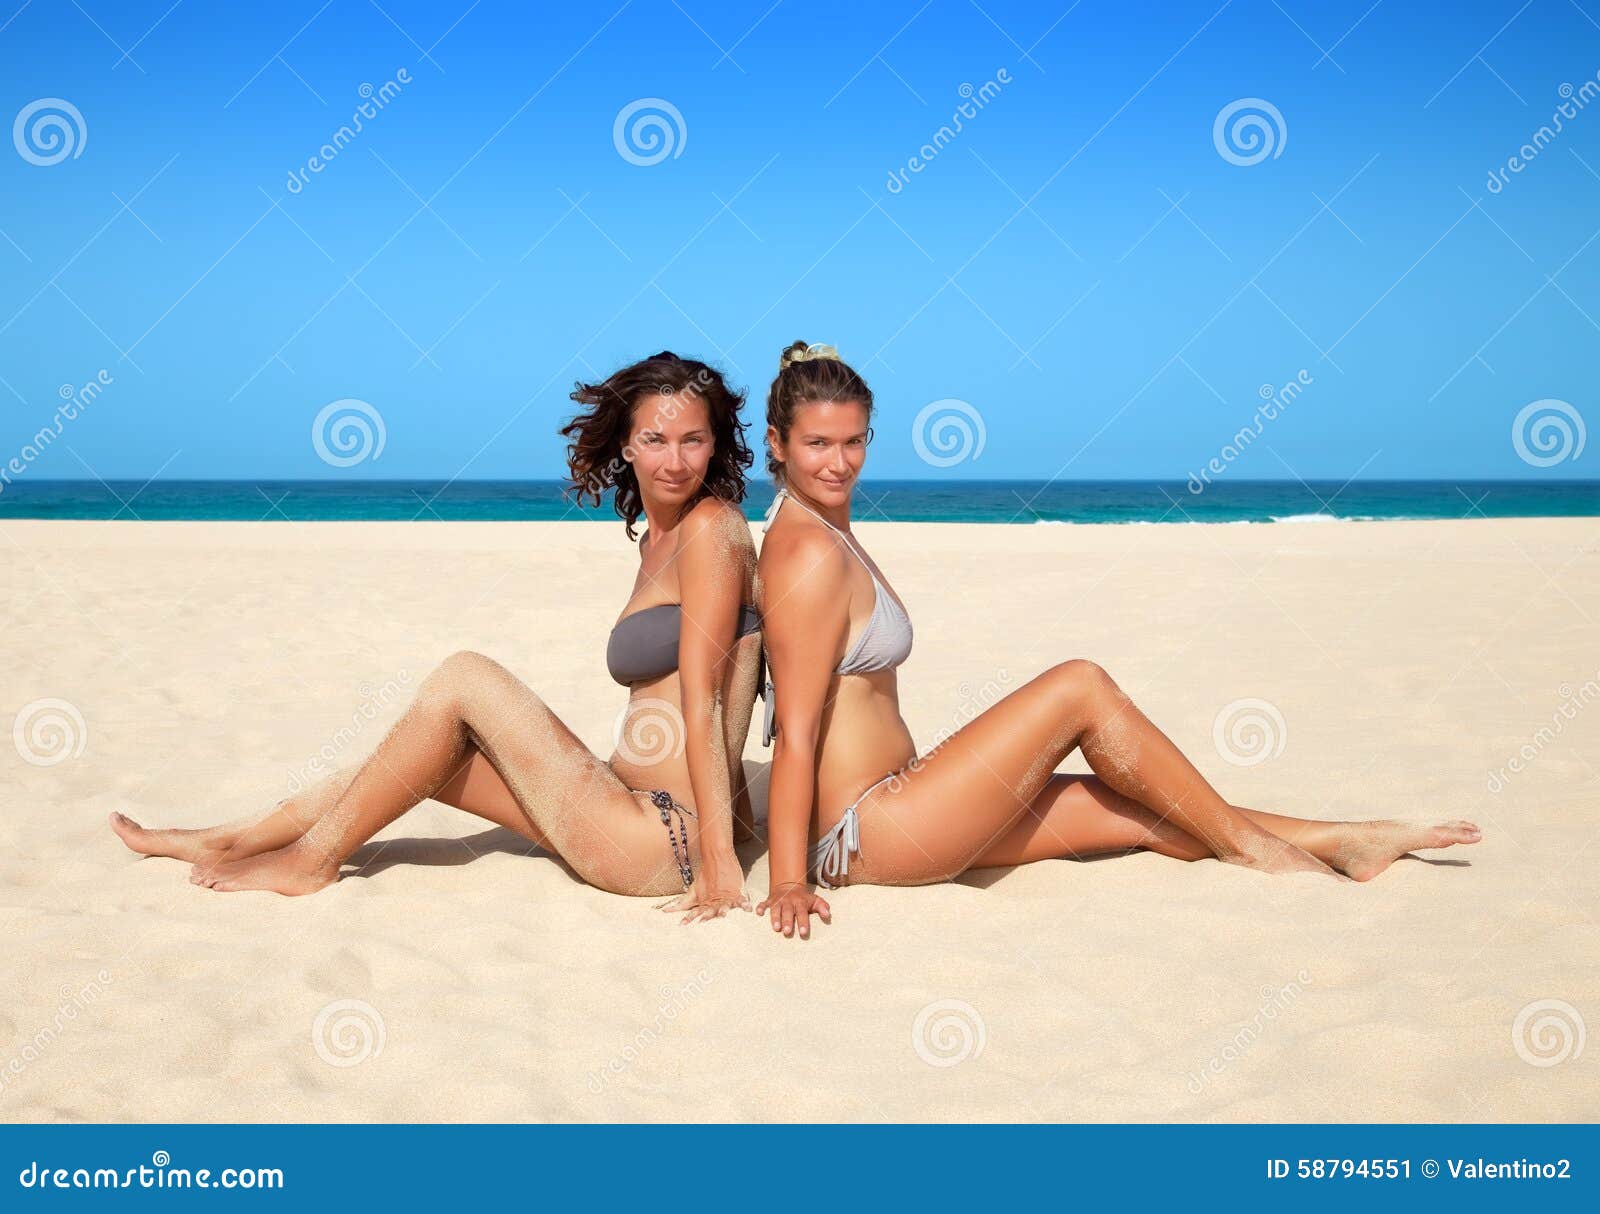 Vrouwen in Bikini Op Strand Stock Afbeelding - Image of